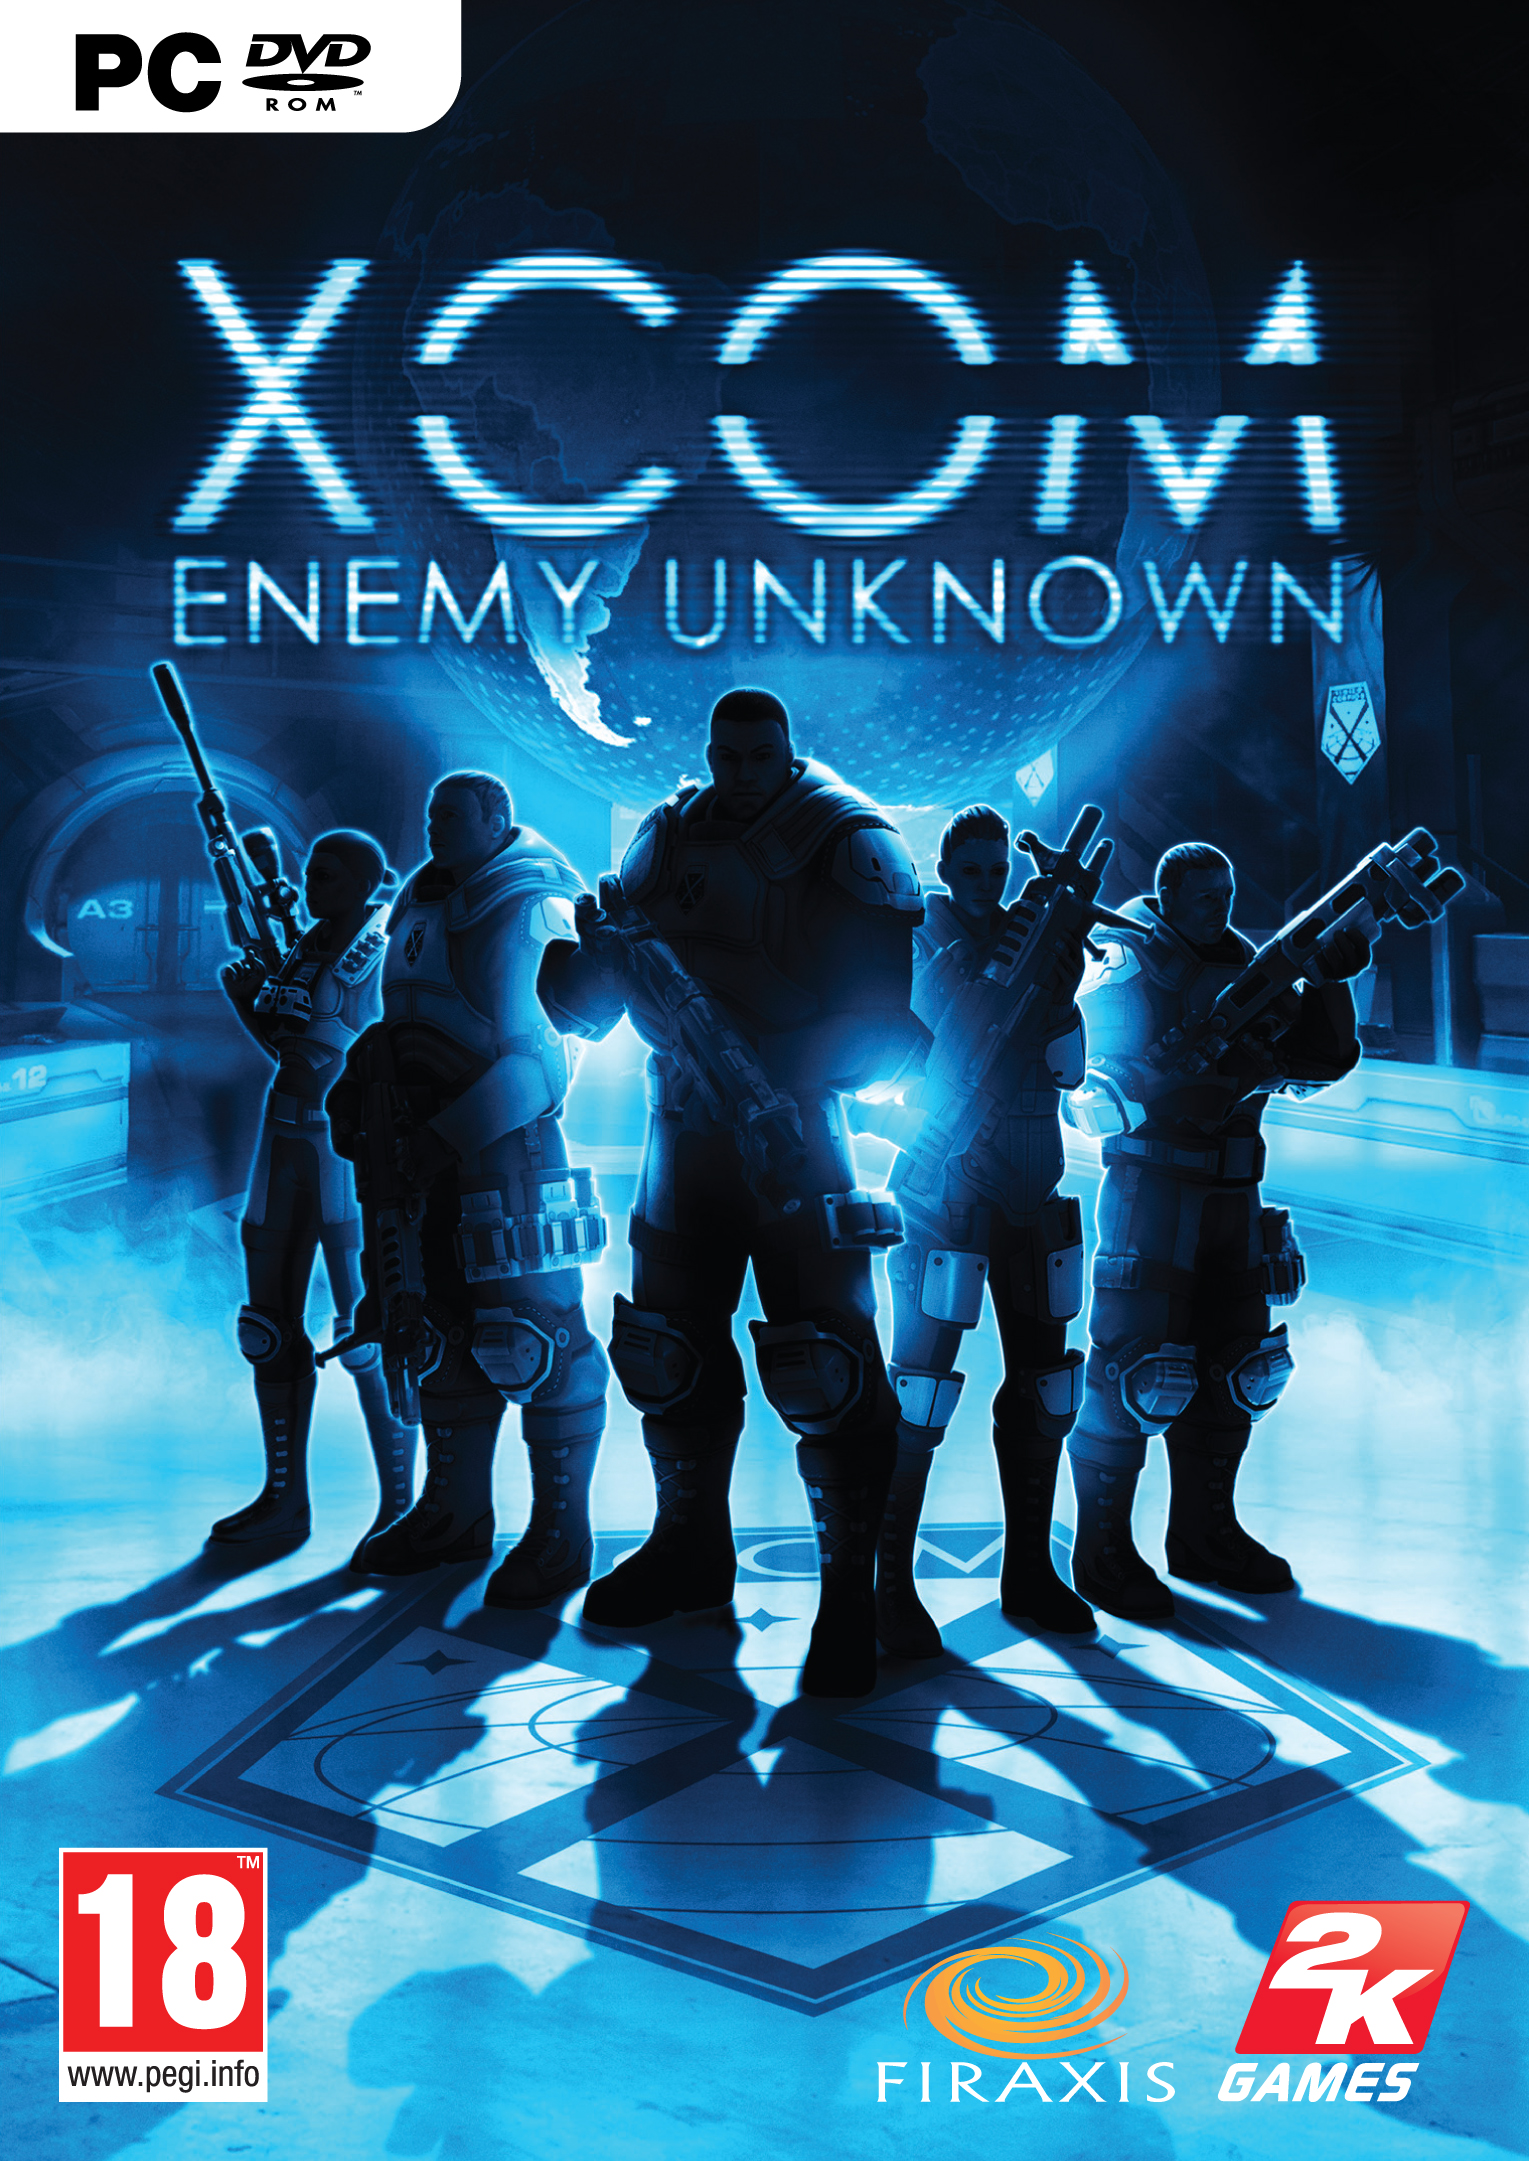 XCOM: Enemy Unknown HD wallpapers, Desktop wallpaper - most viewed